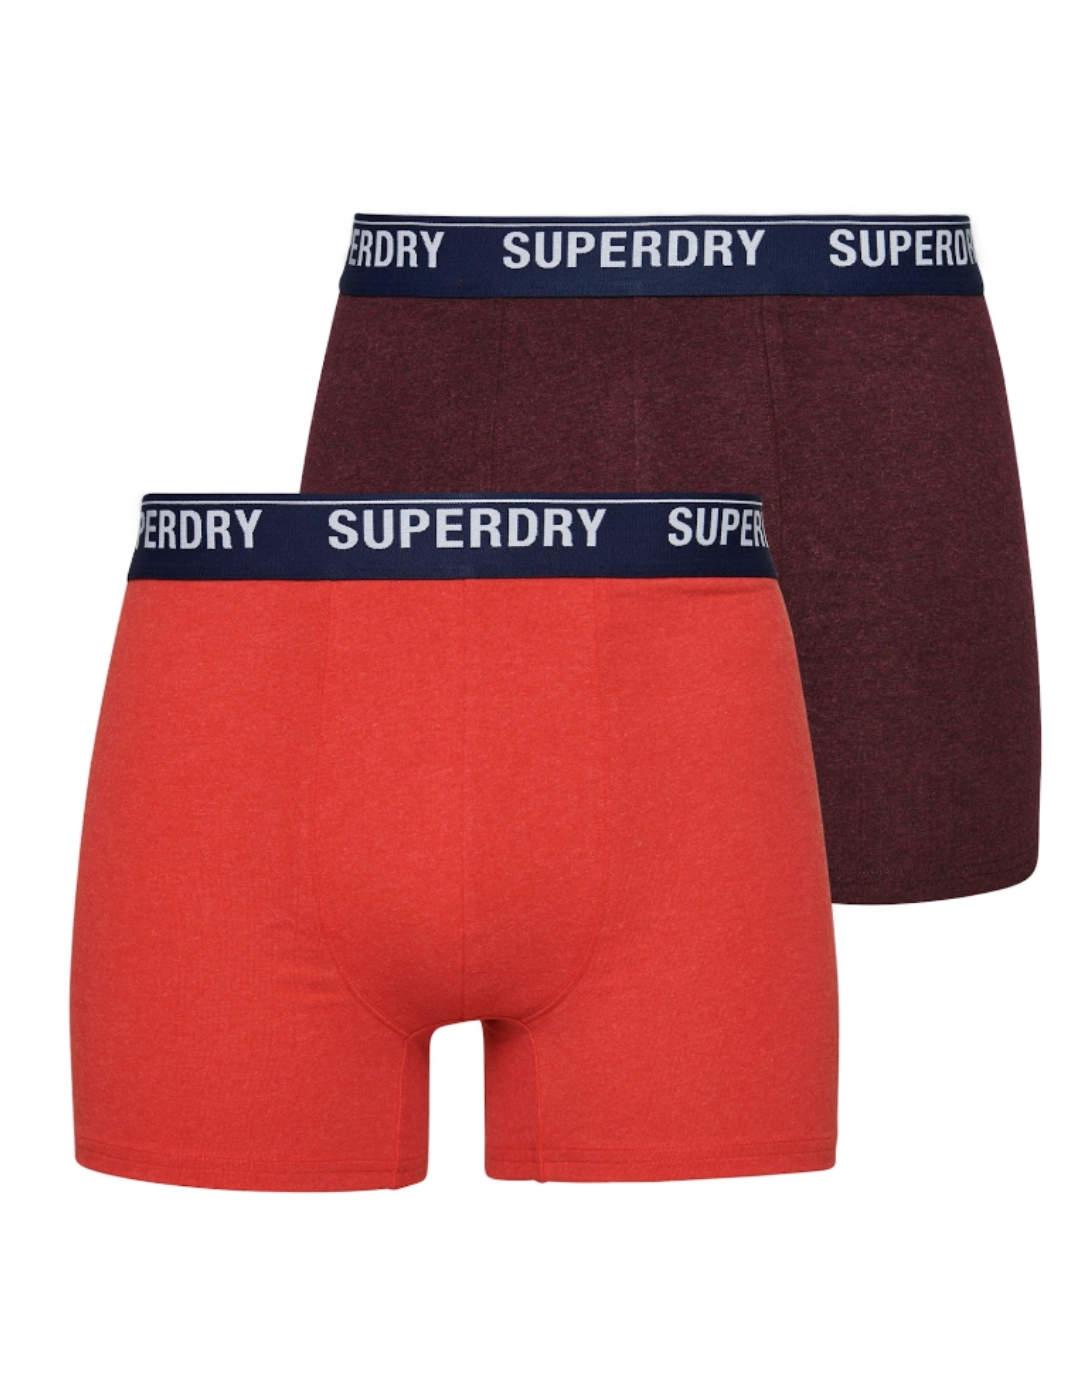 Intimo Superdry boxer pack2 rojo para hombre-b